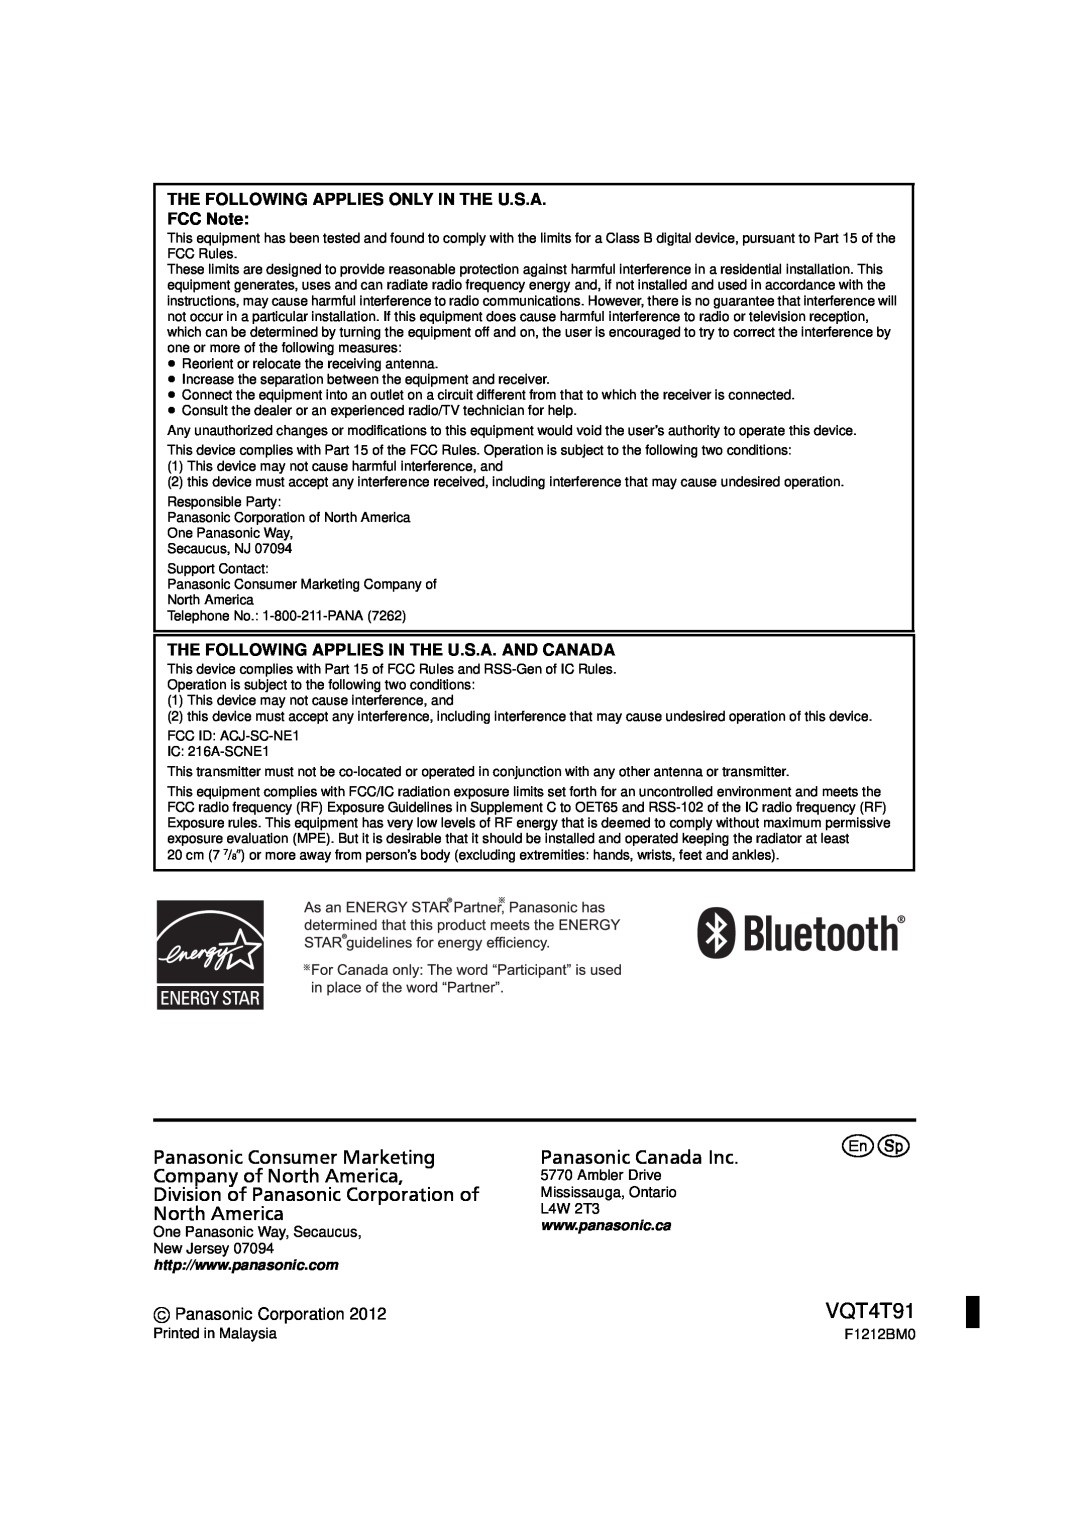 Panasonic SC-NE1 VQT4T91, THE FOLLOWING APPLIES ONLY IN THE U.S.A FCC Note, The Following Applies In The U.S.A. And Canada 